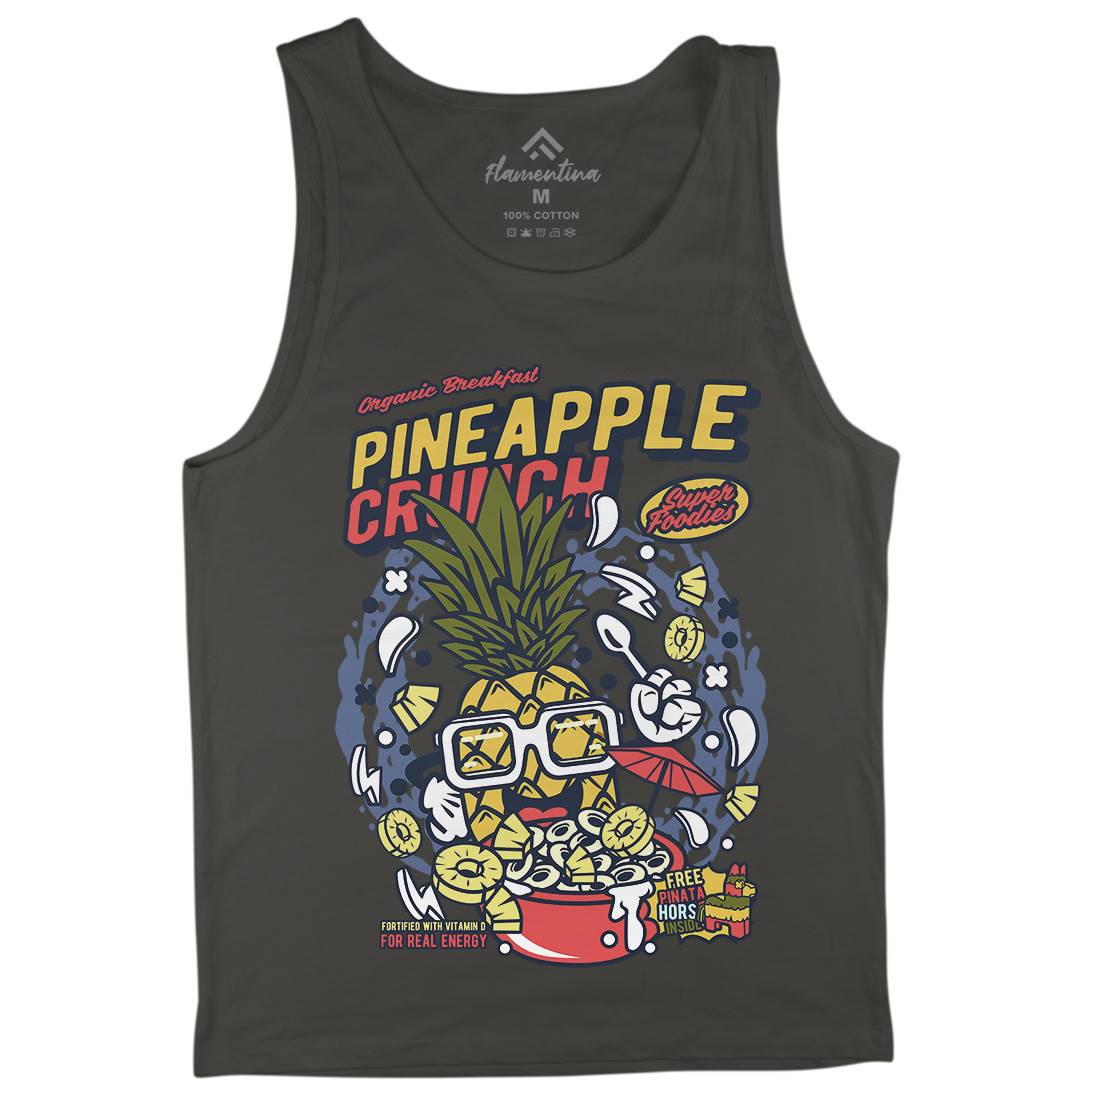 Pineapple Crunch Mens Tank Top Vest Food C605